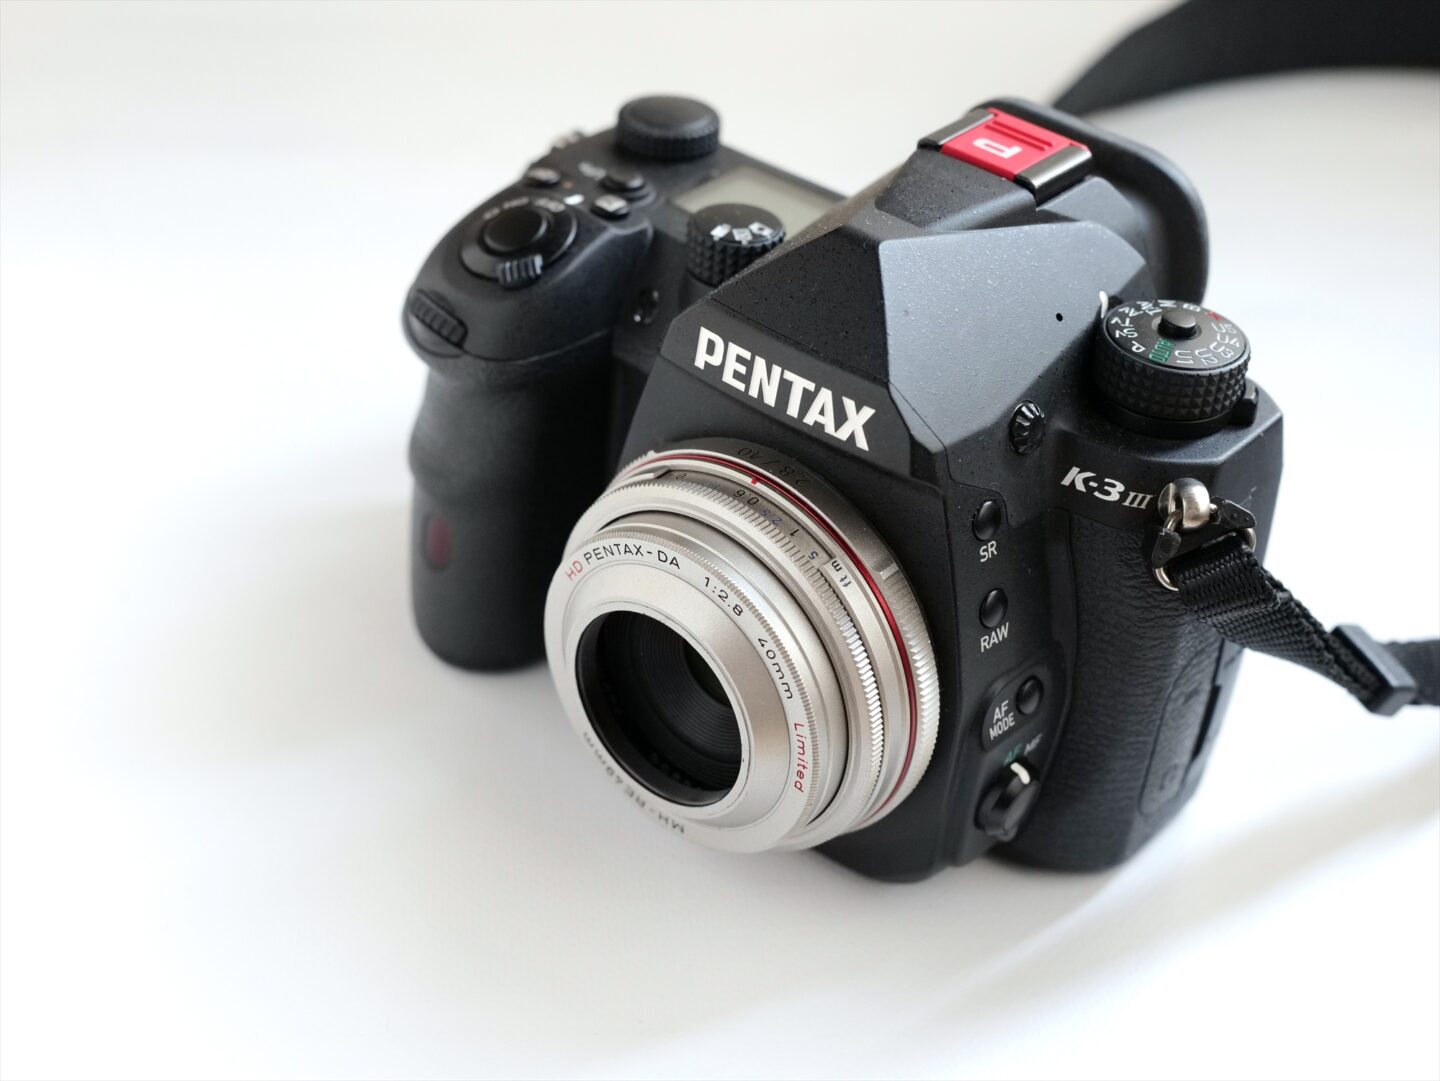 HD PENTAX-DA 40mmF2.8 Limited 標準単焦点レンズ APS-Cサイズ用 ブラック 超軽量薄型パンケーキレンズ